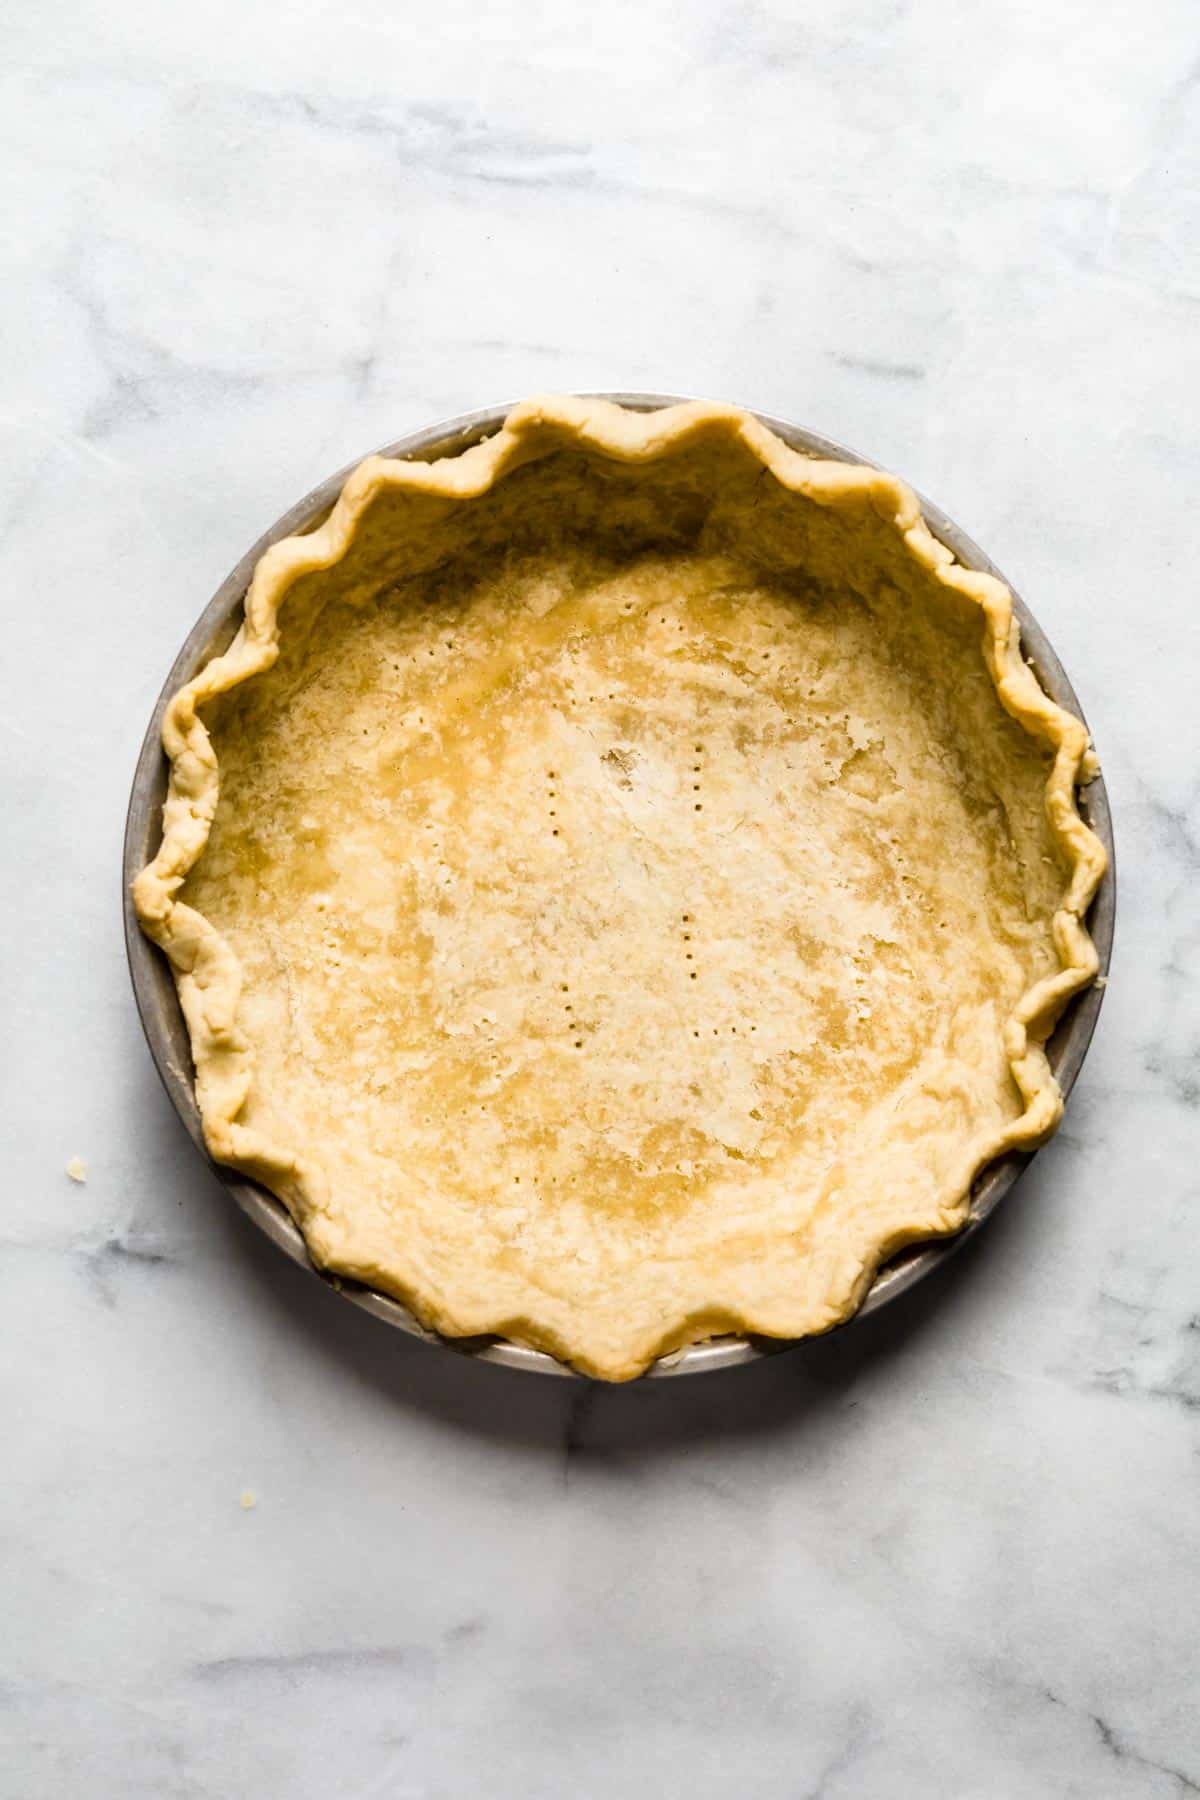 A docked gluten free pie crust that is par baked.